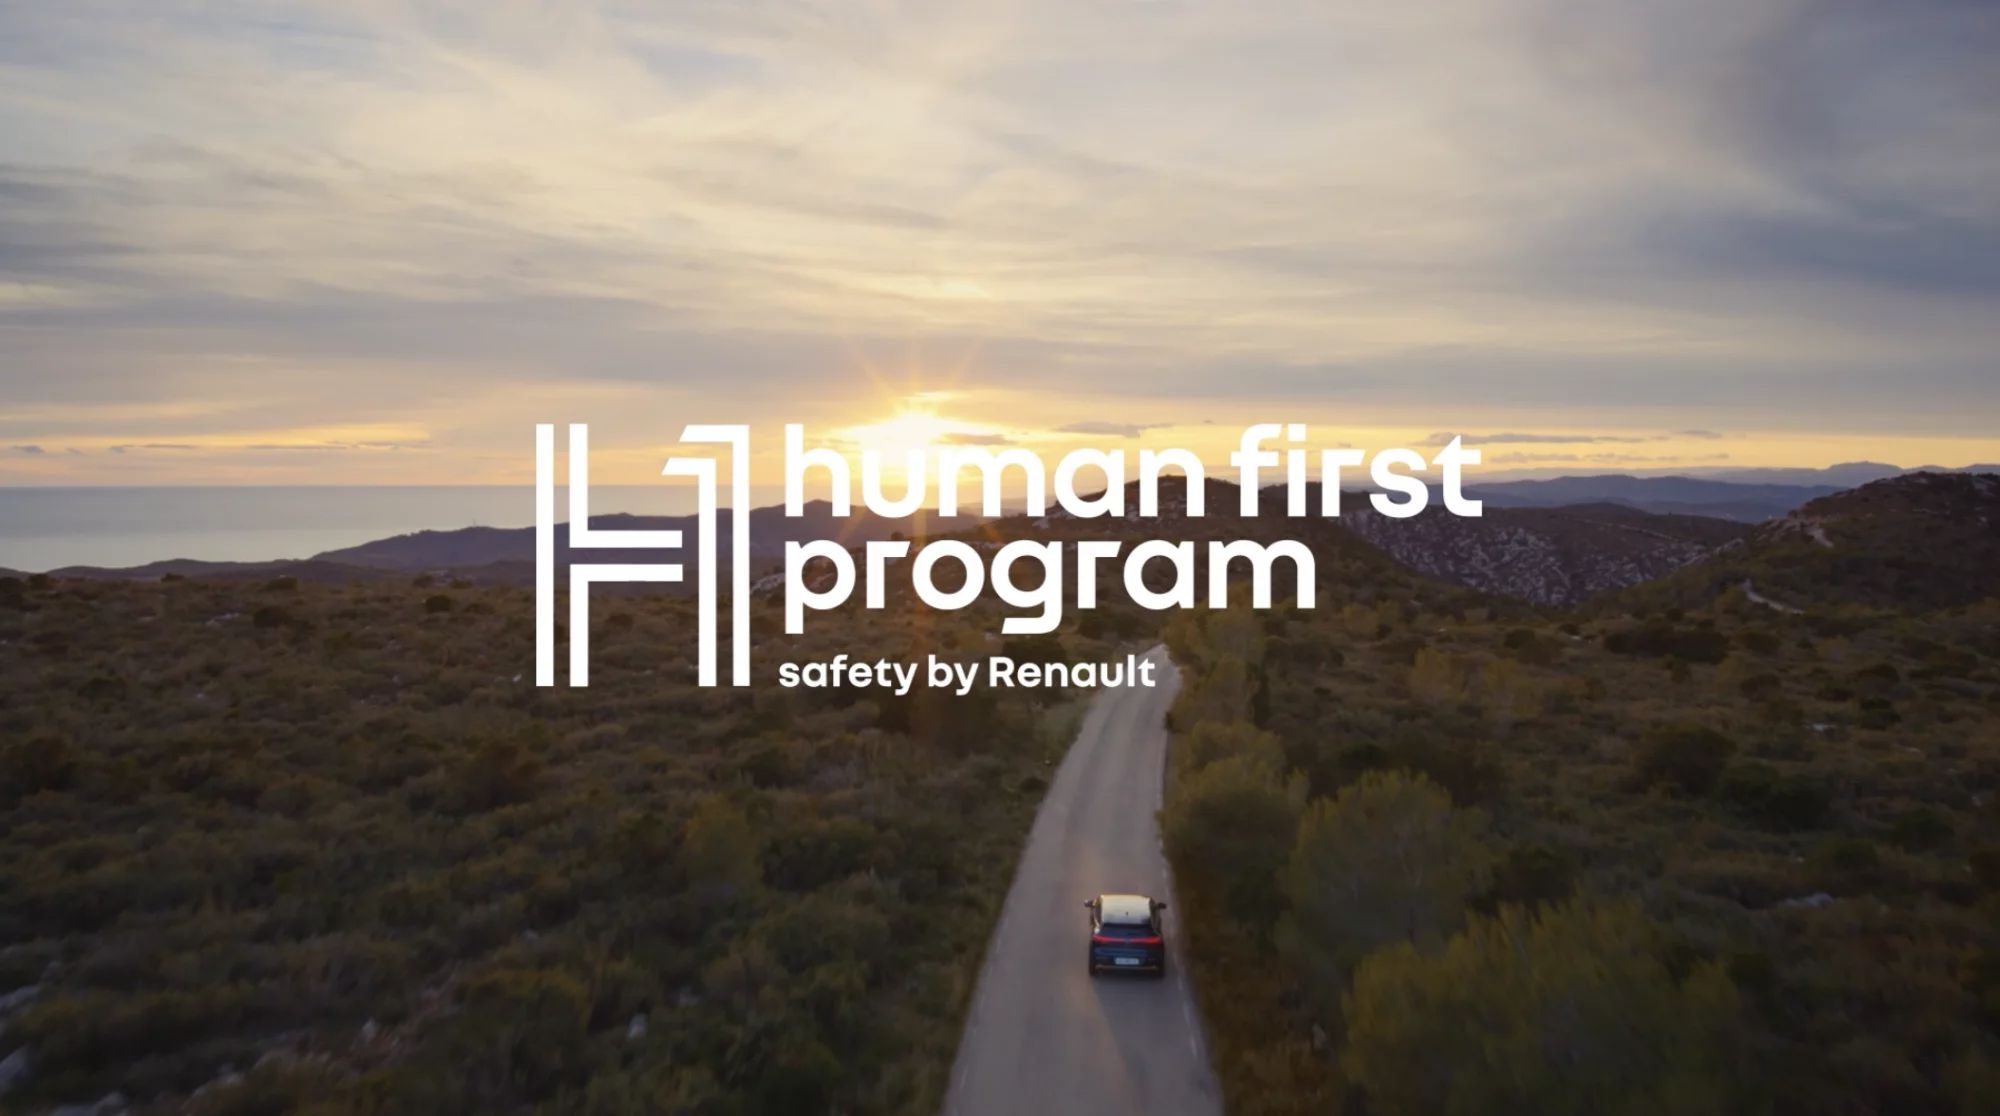 Canzone Pubblicità Renault Human First Program